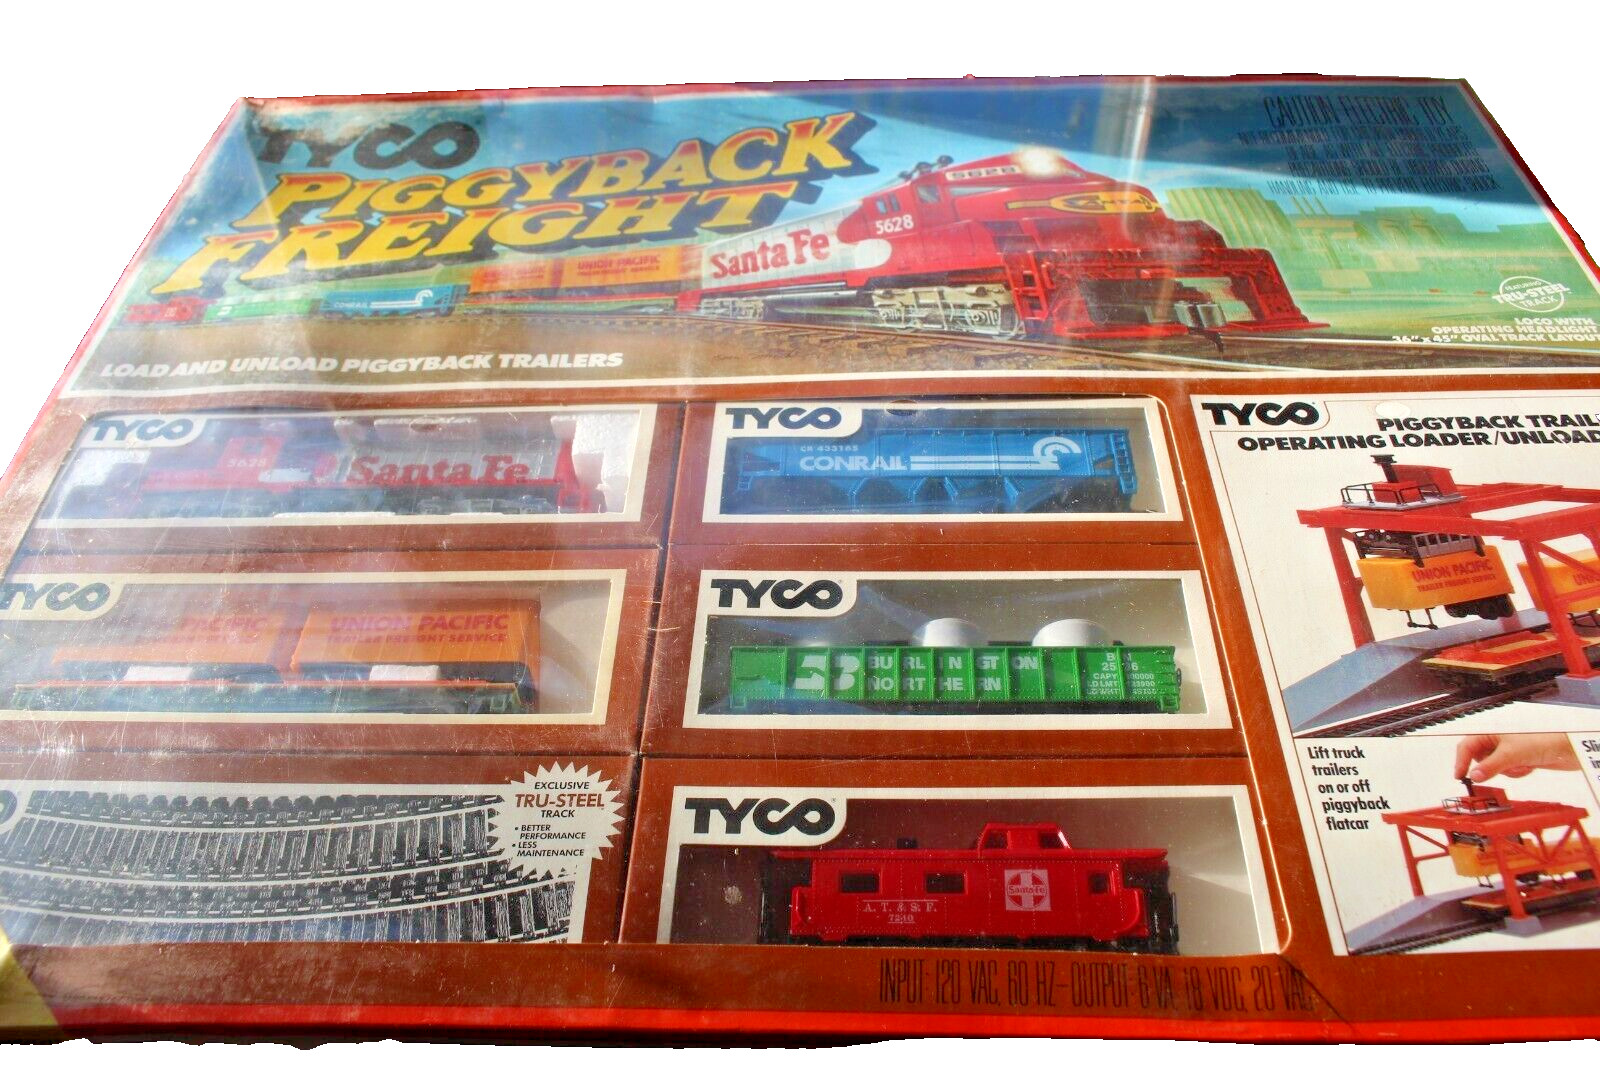 Tyco PIGGYBACK EXPRESS 7310 WITH OPERATING LOADER SEALED BOX.